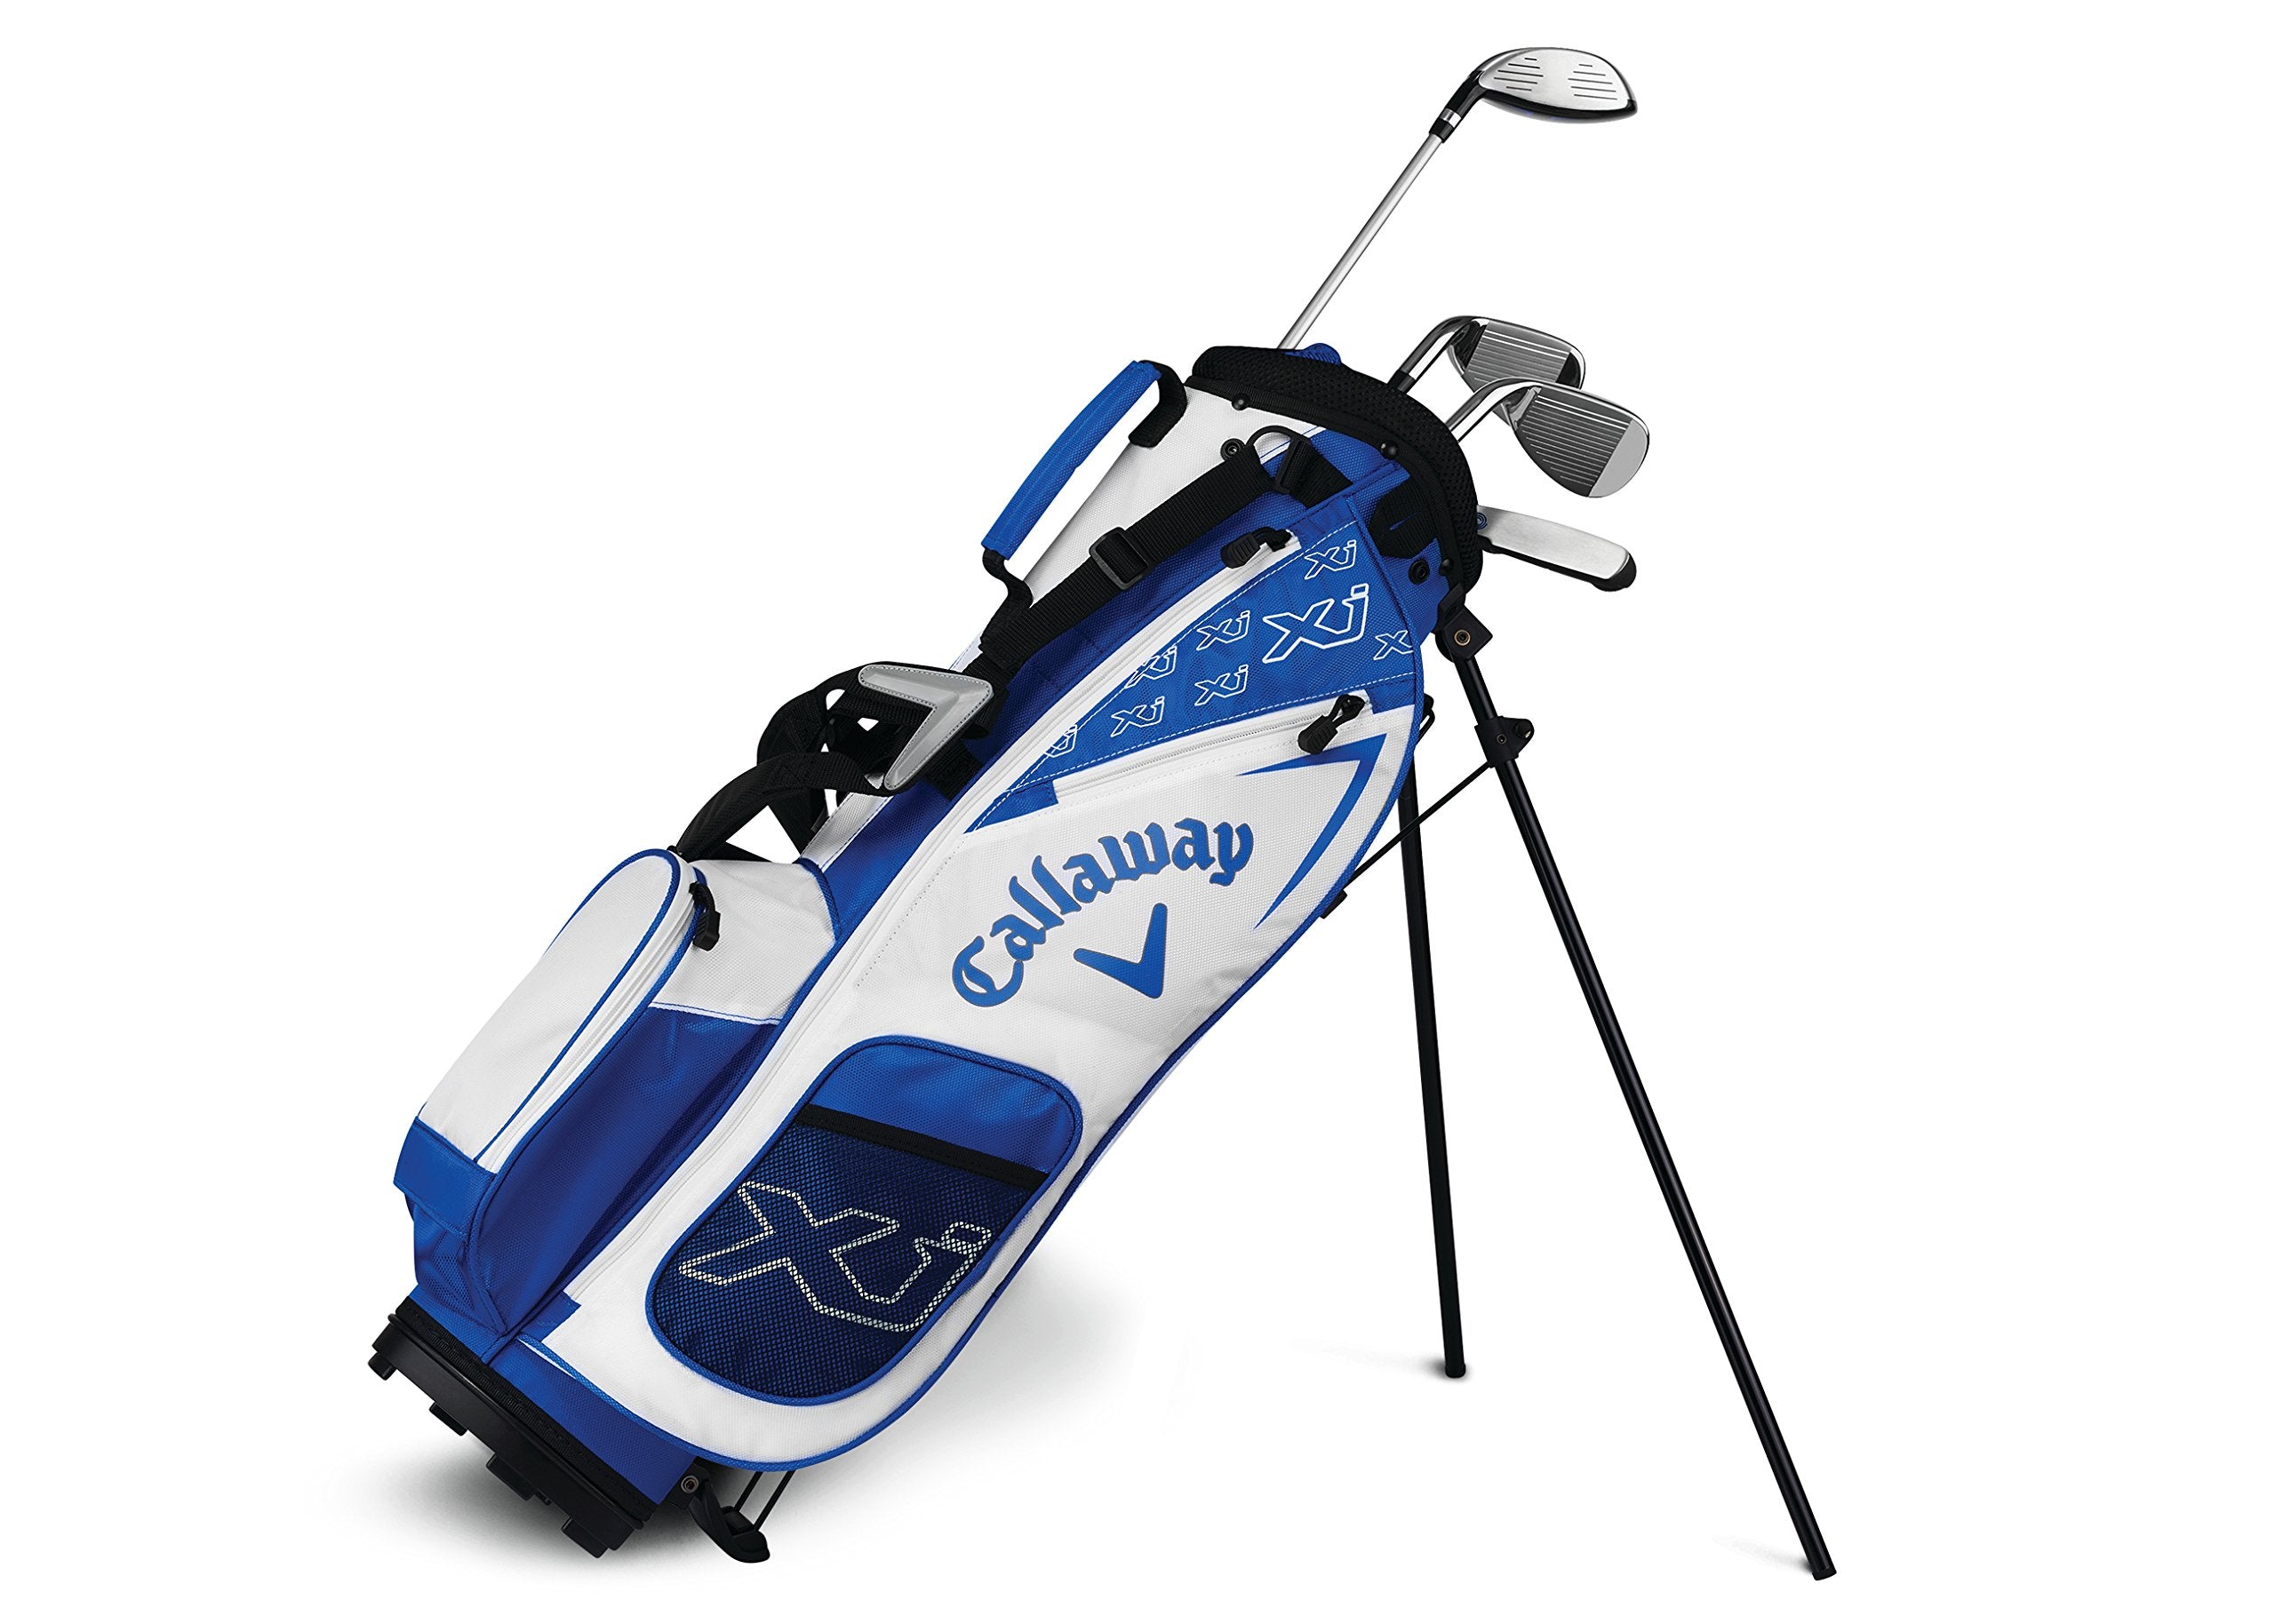 Callaway Golf XJ Junior Golf Set